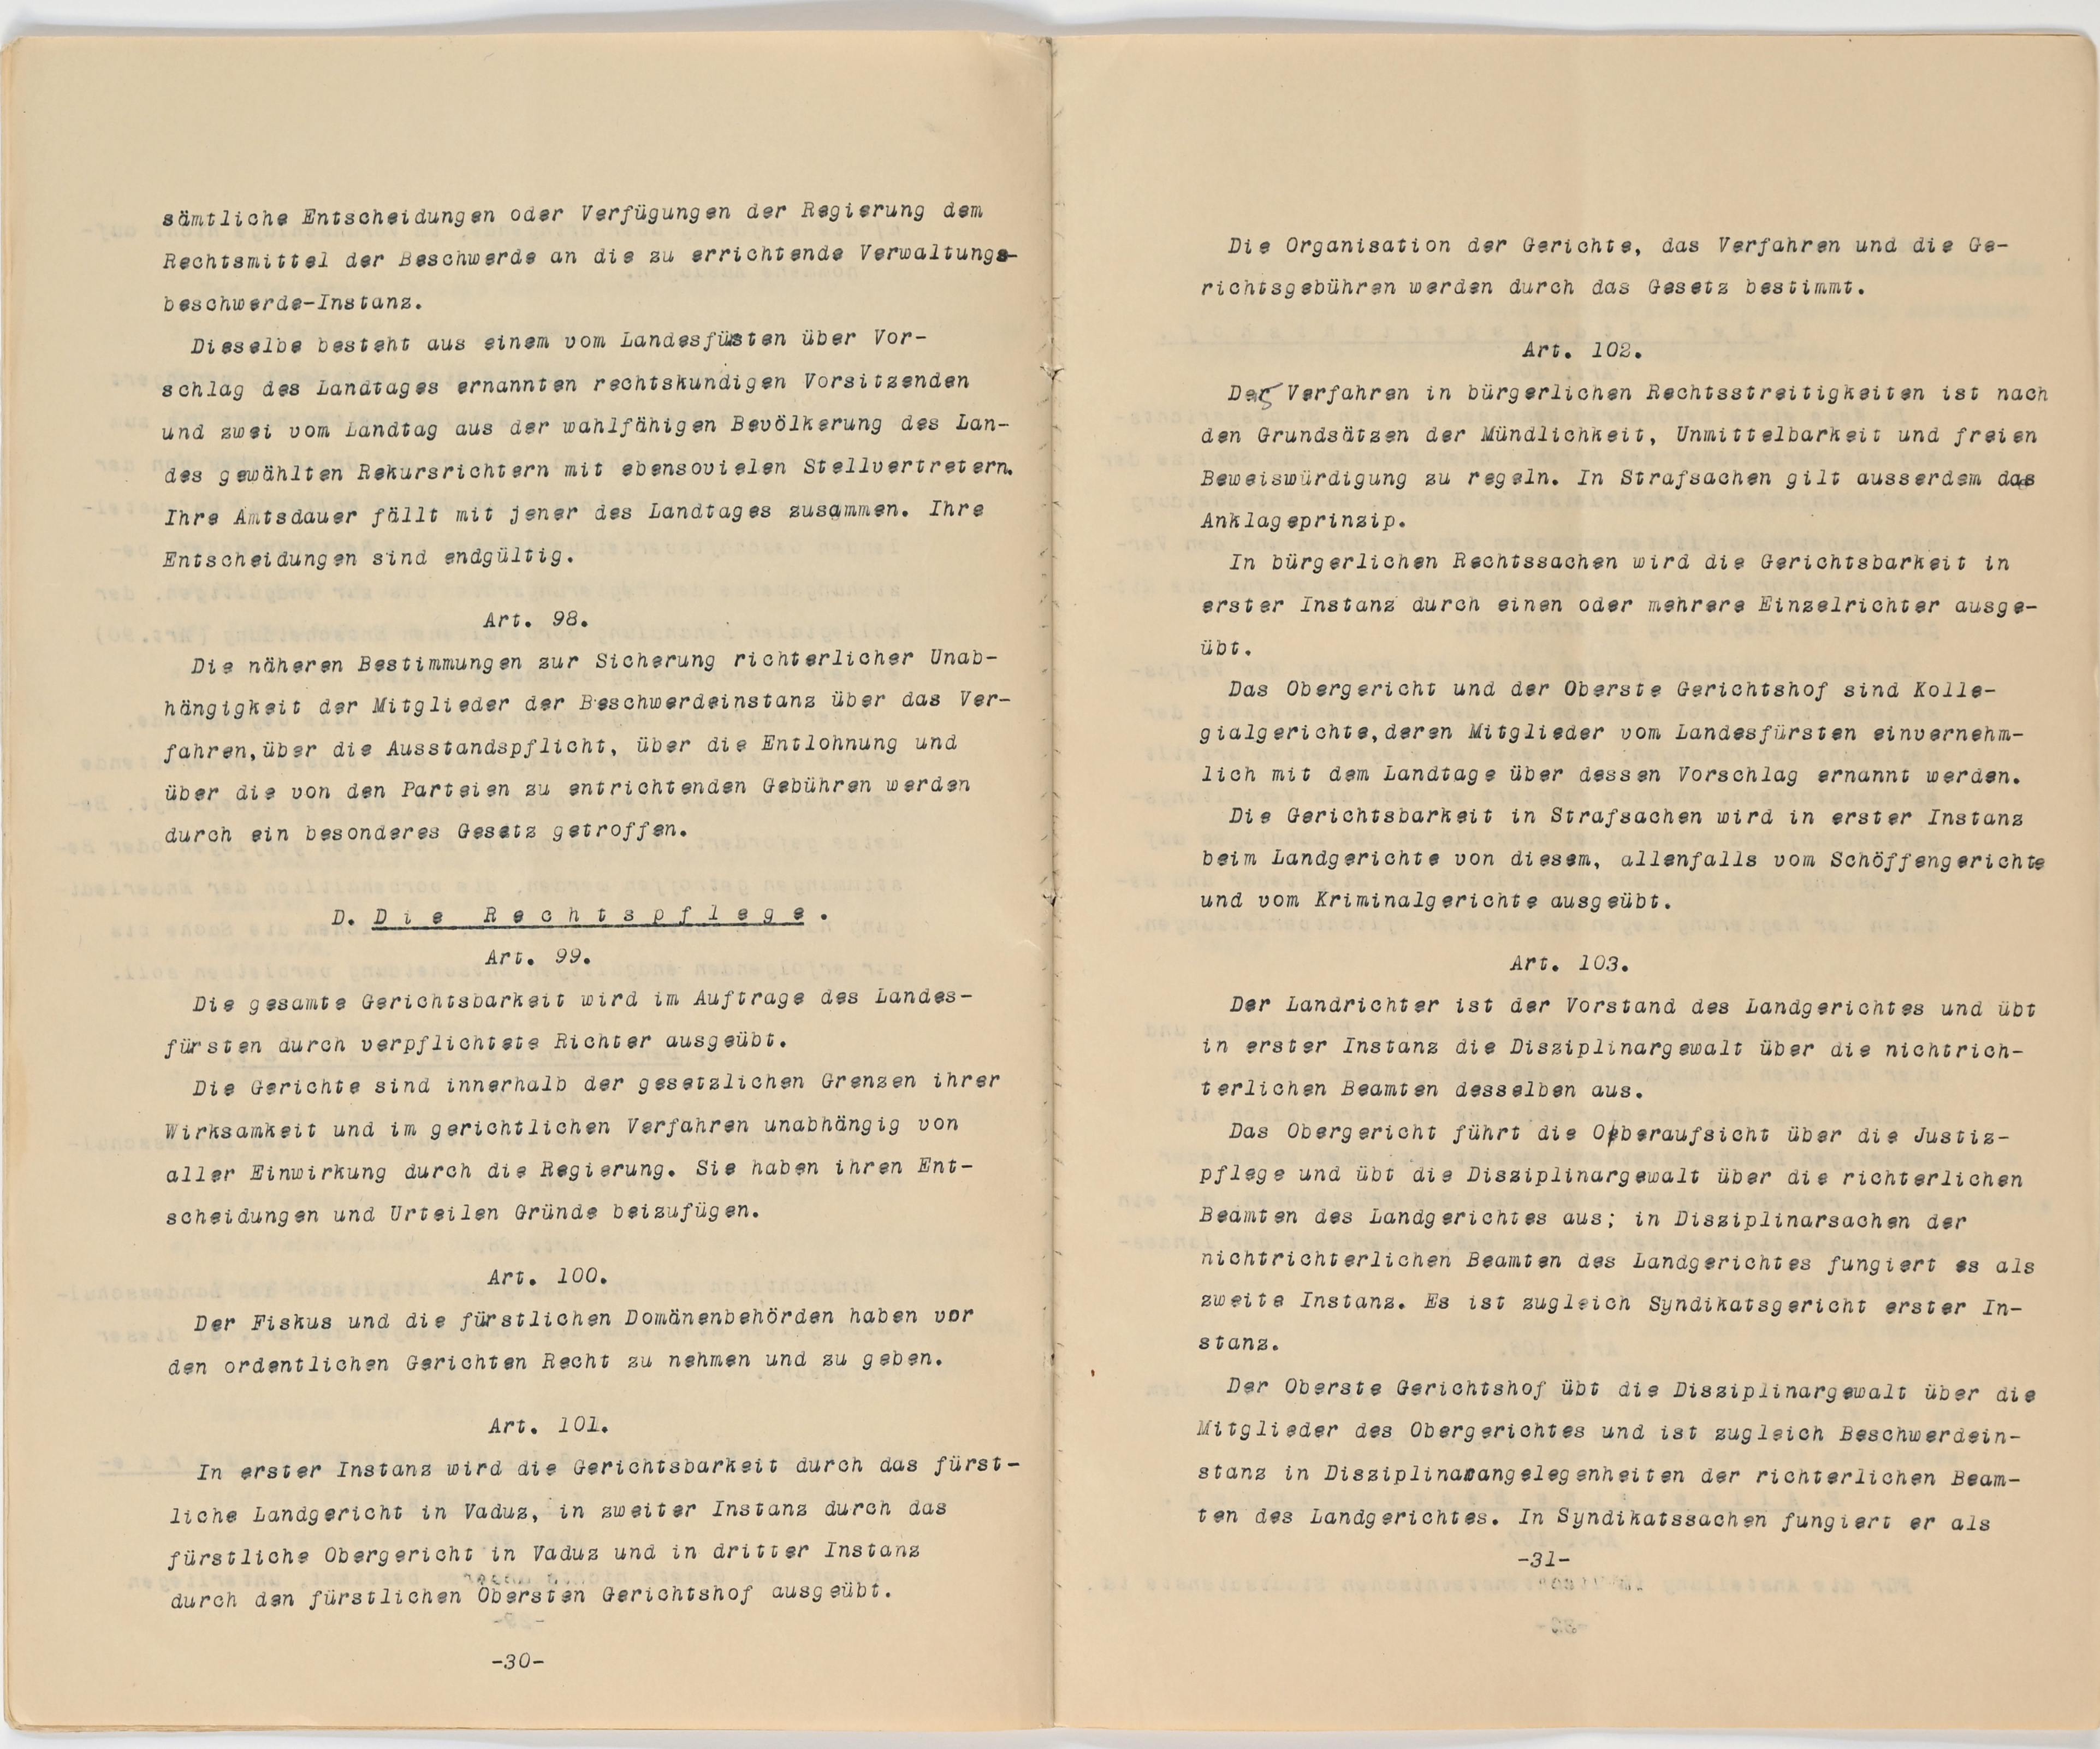 Verfassung 1921 Art. 98 bis Art. 103